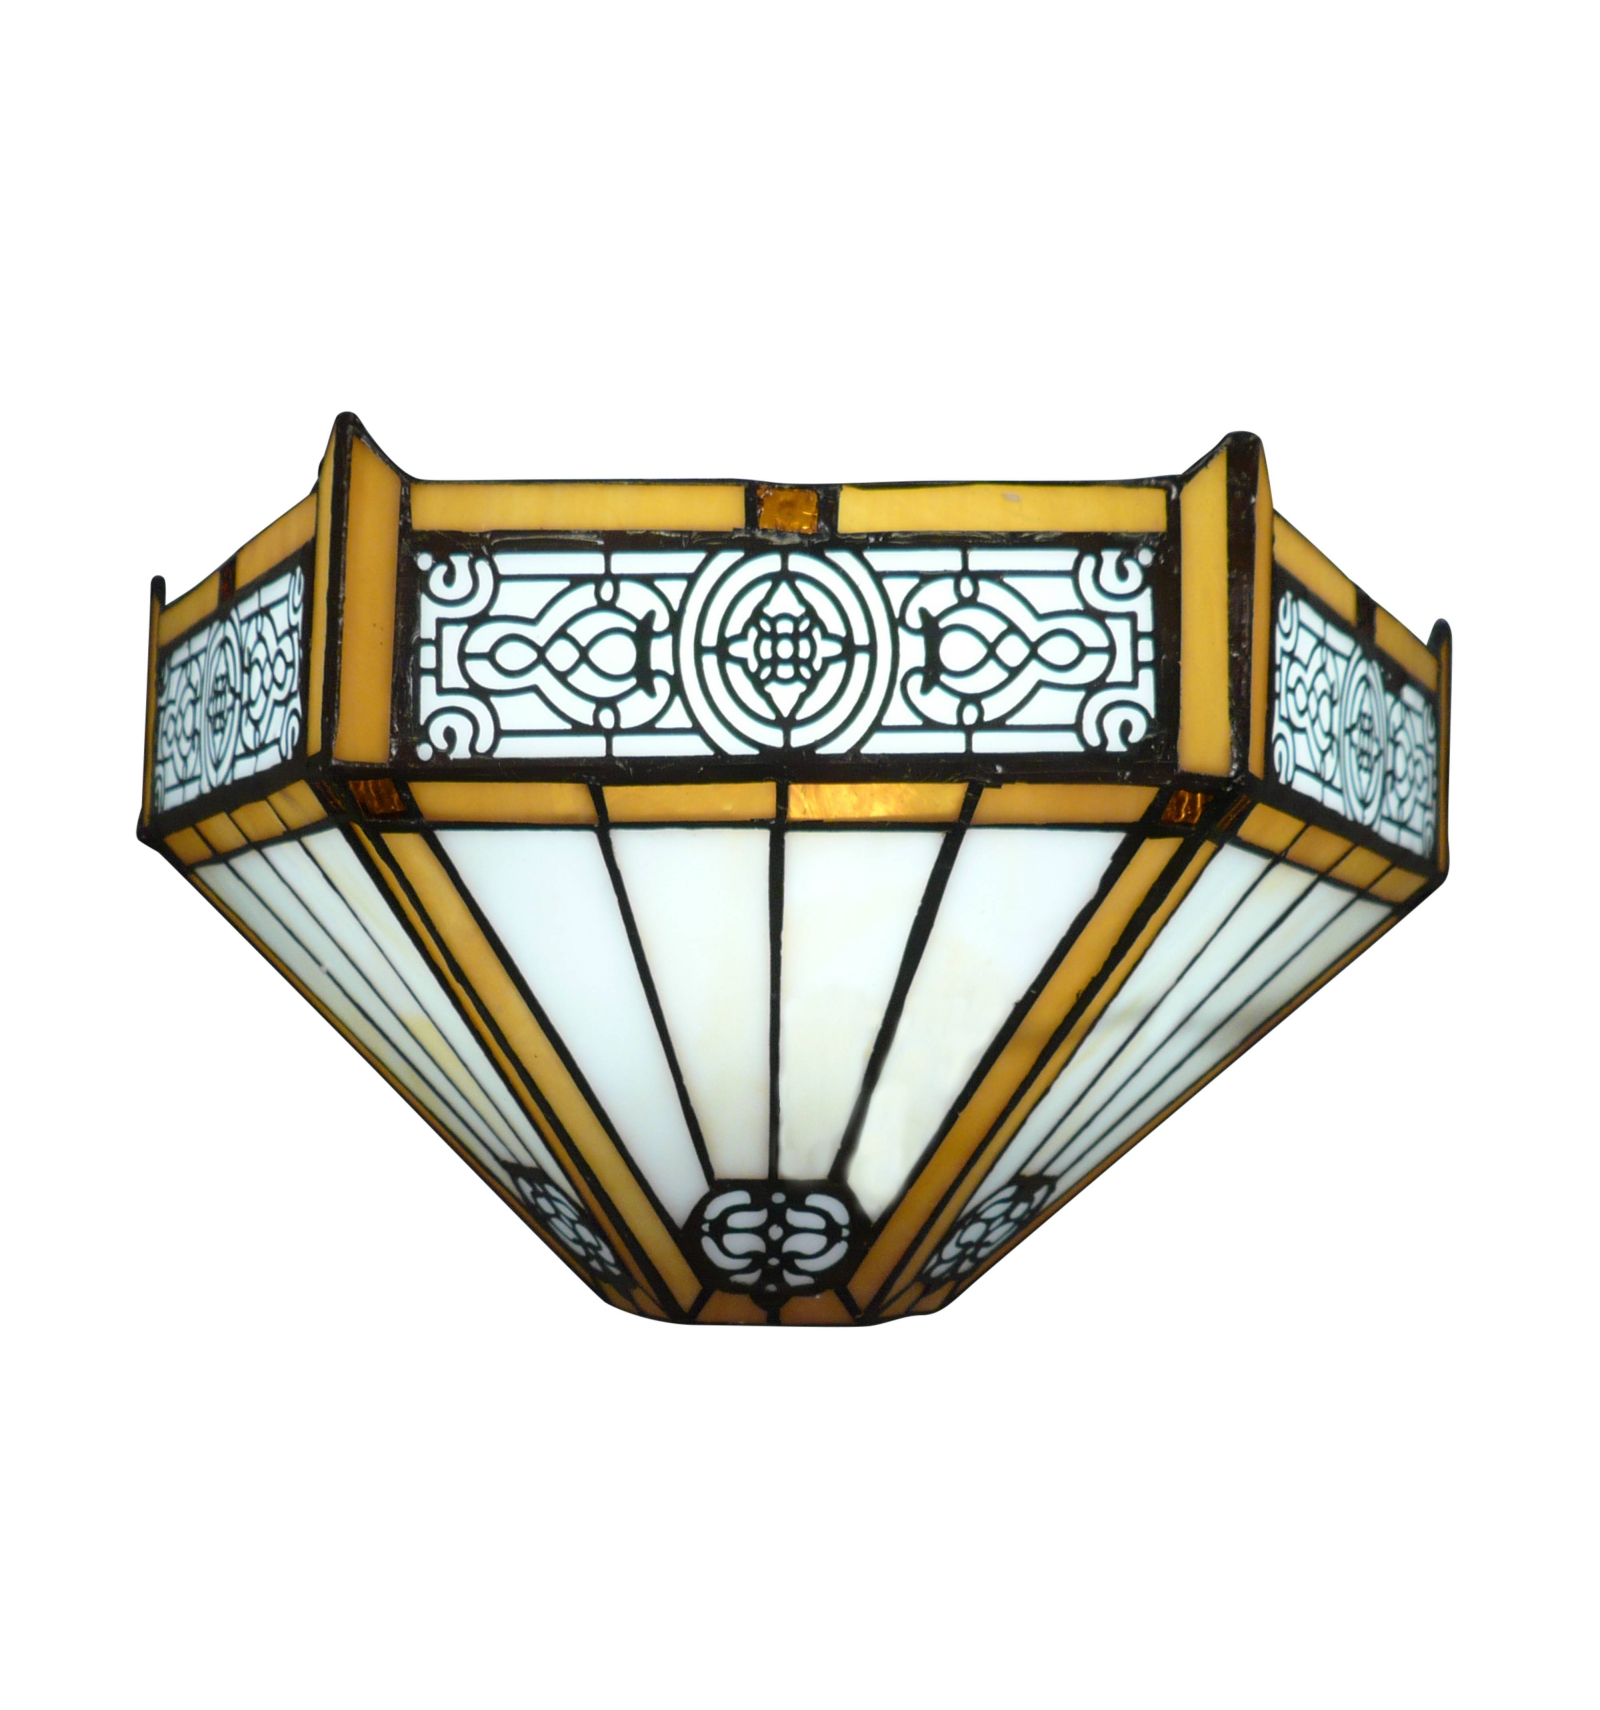 versterking films paars Tiffany wandlamp Utrecht - Art Deco Tiffany lampen